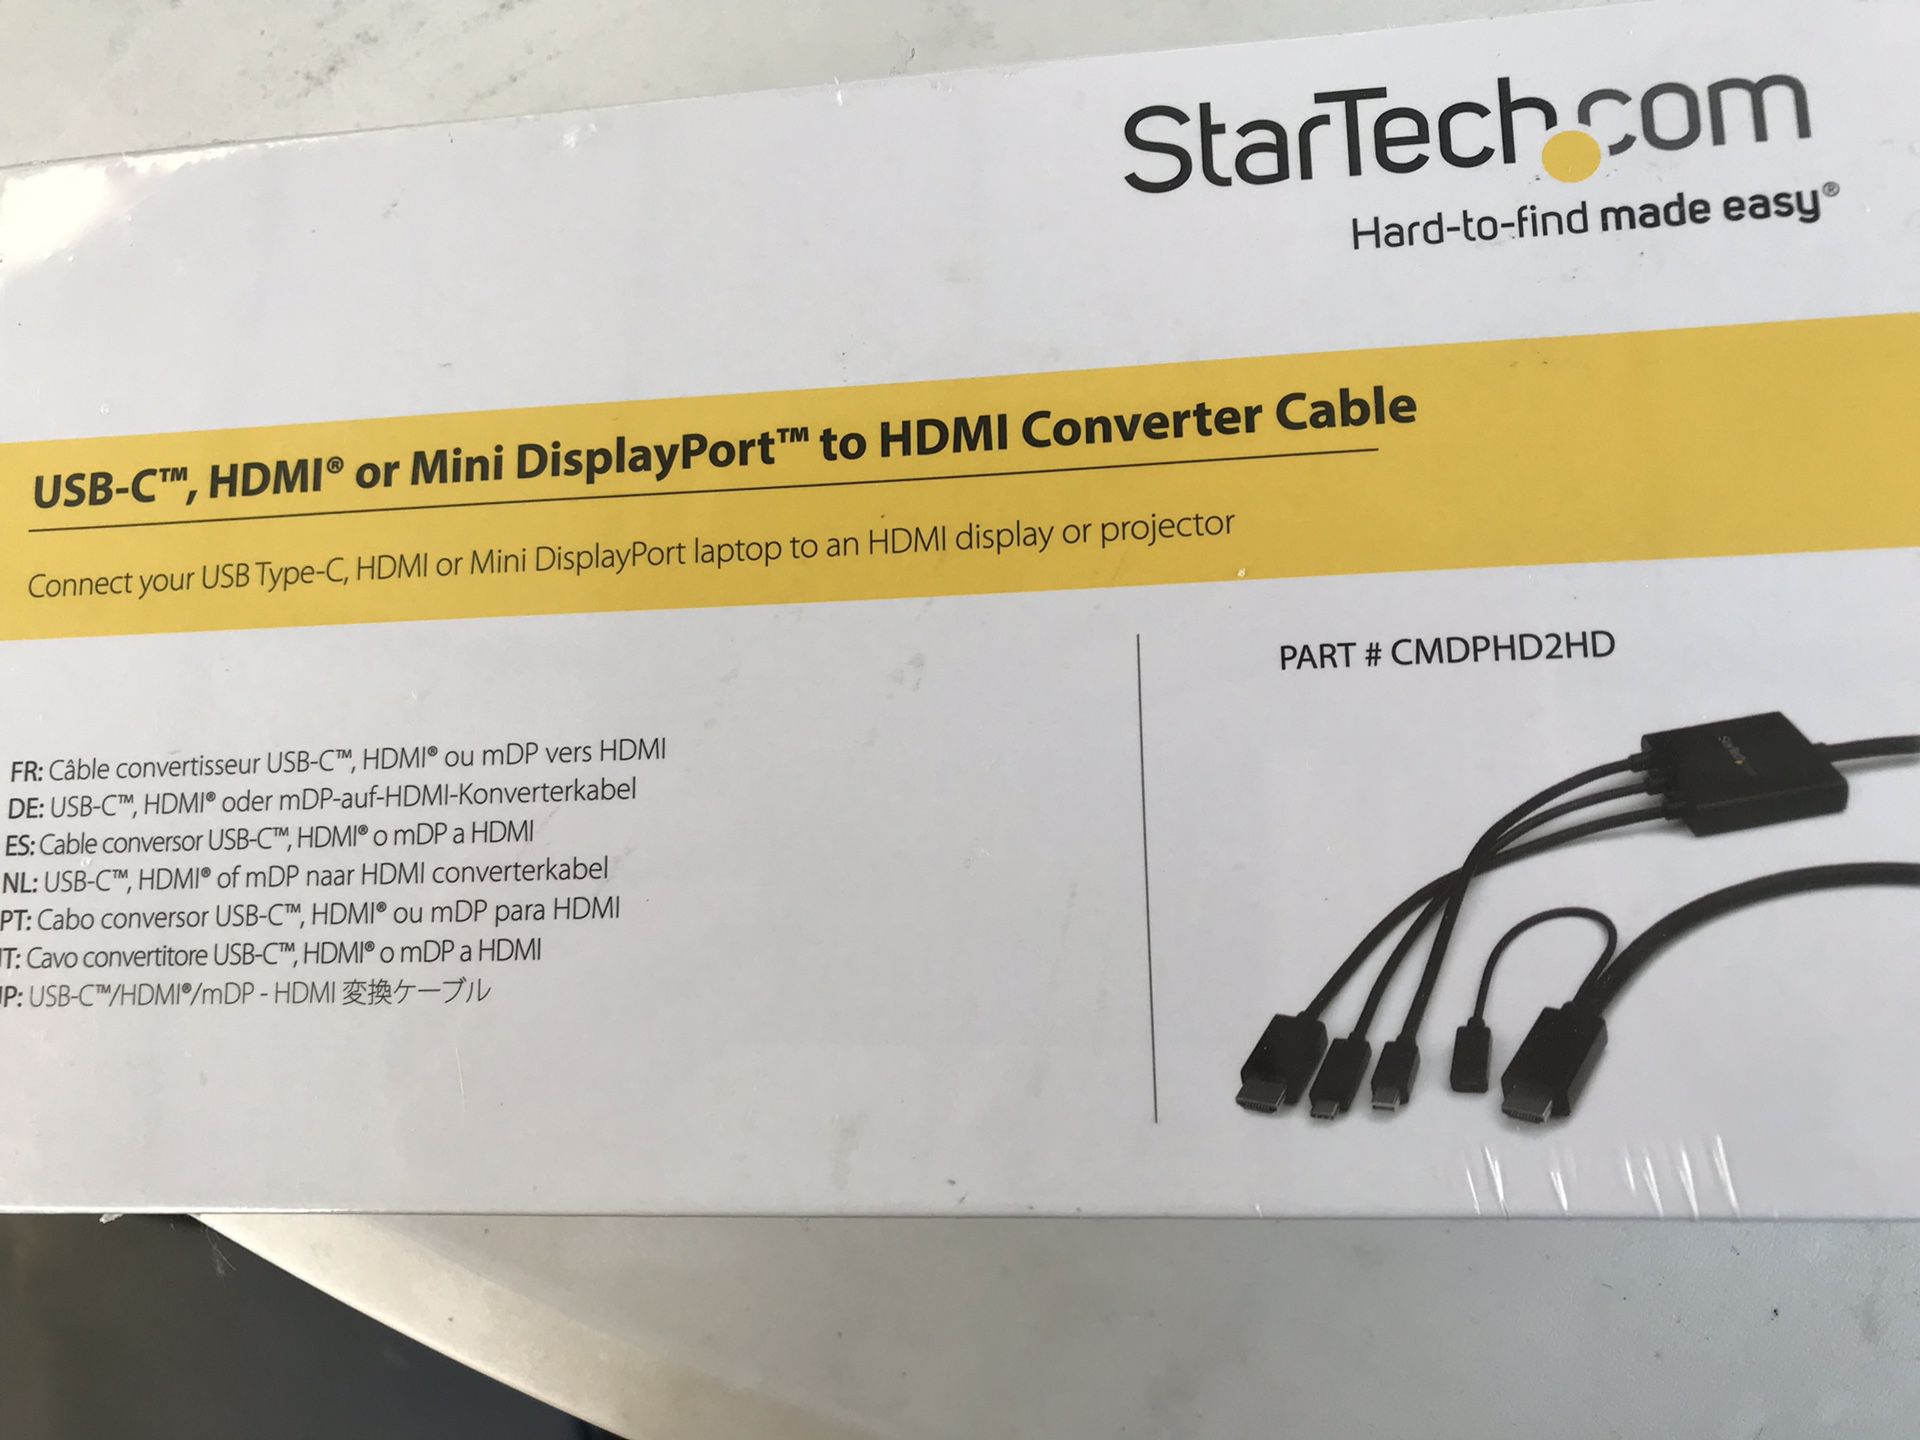 NEW- StarTech USB-c, HDMI, or mini DisplayPort to HDMI converter cable.